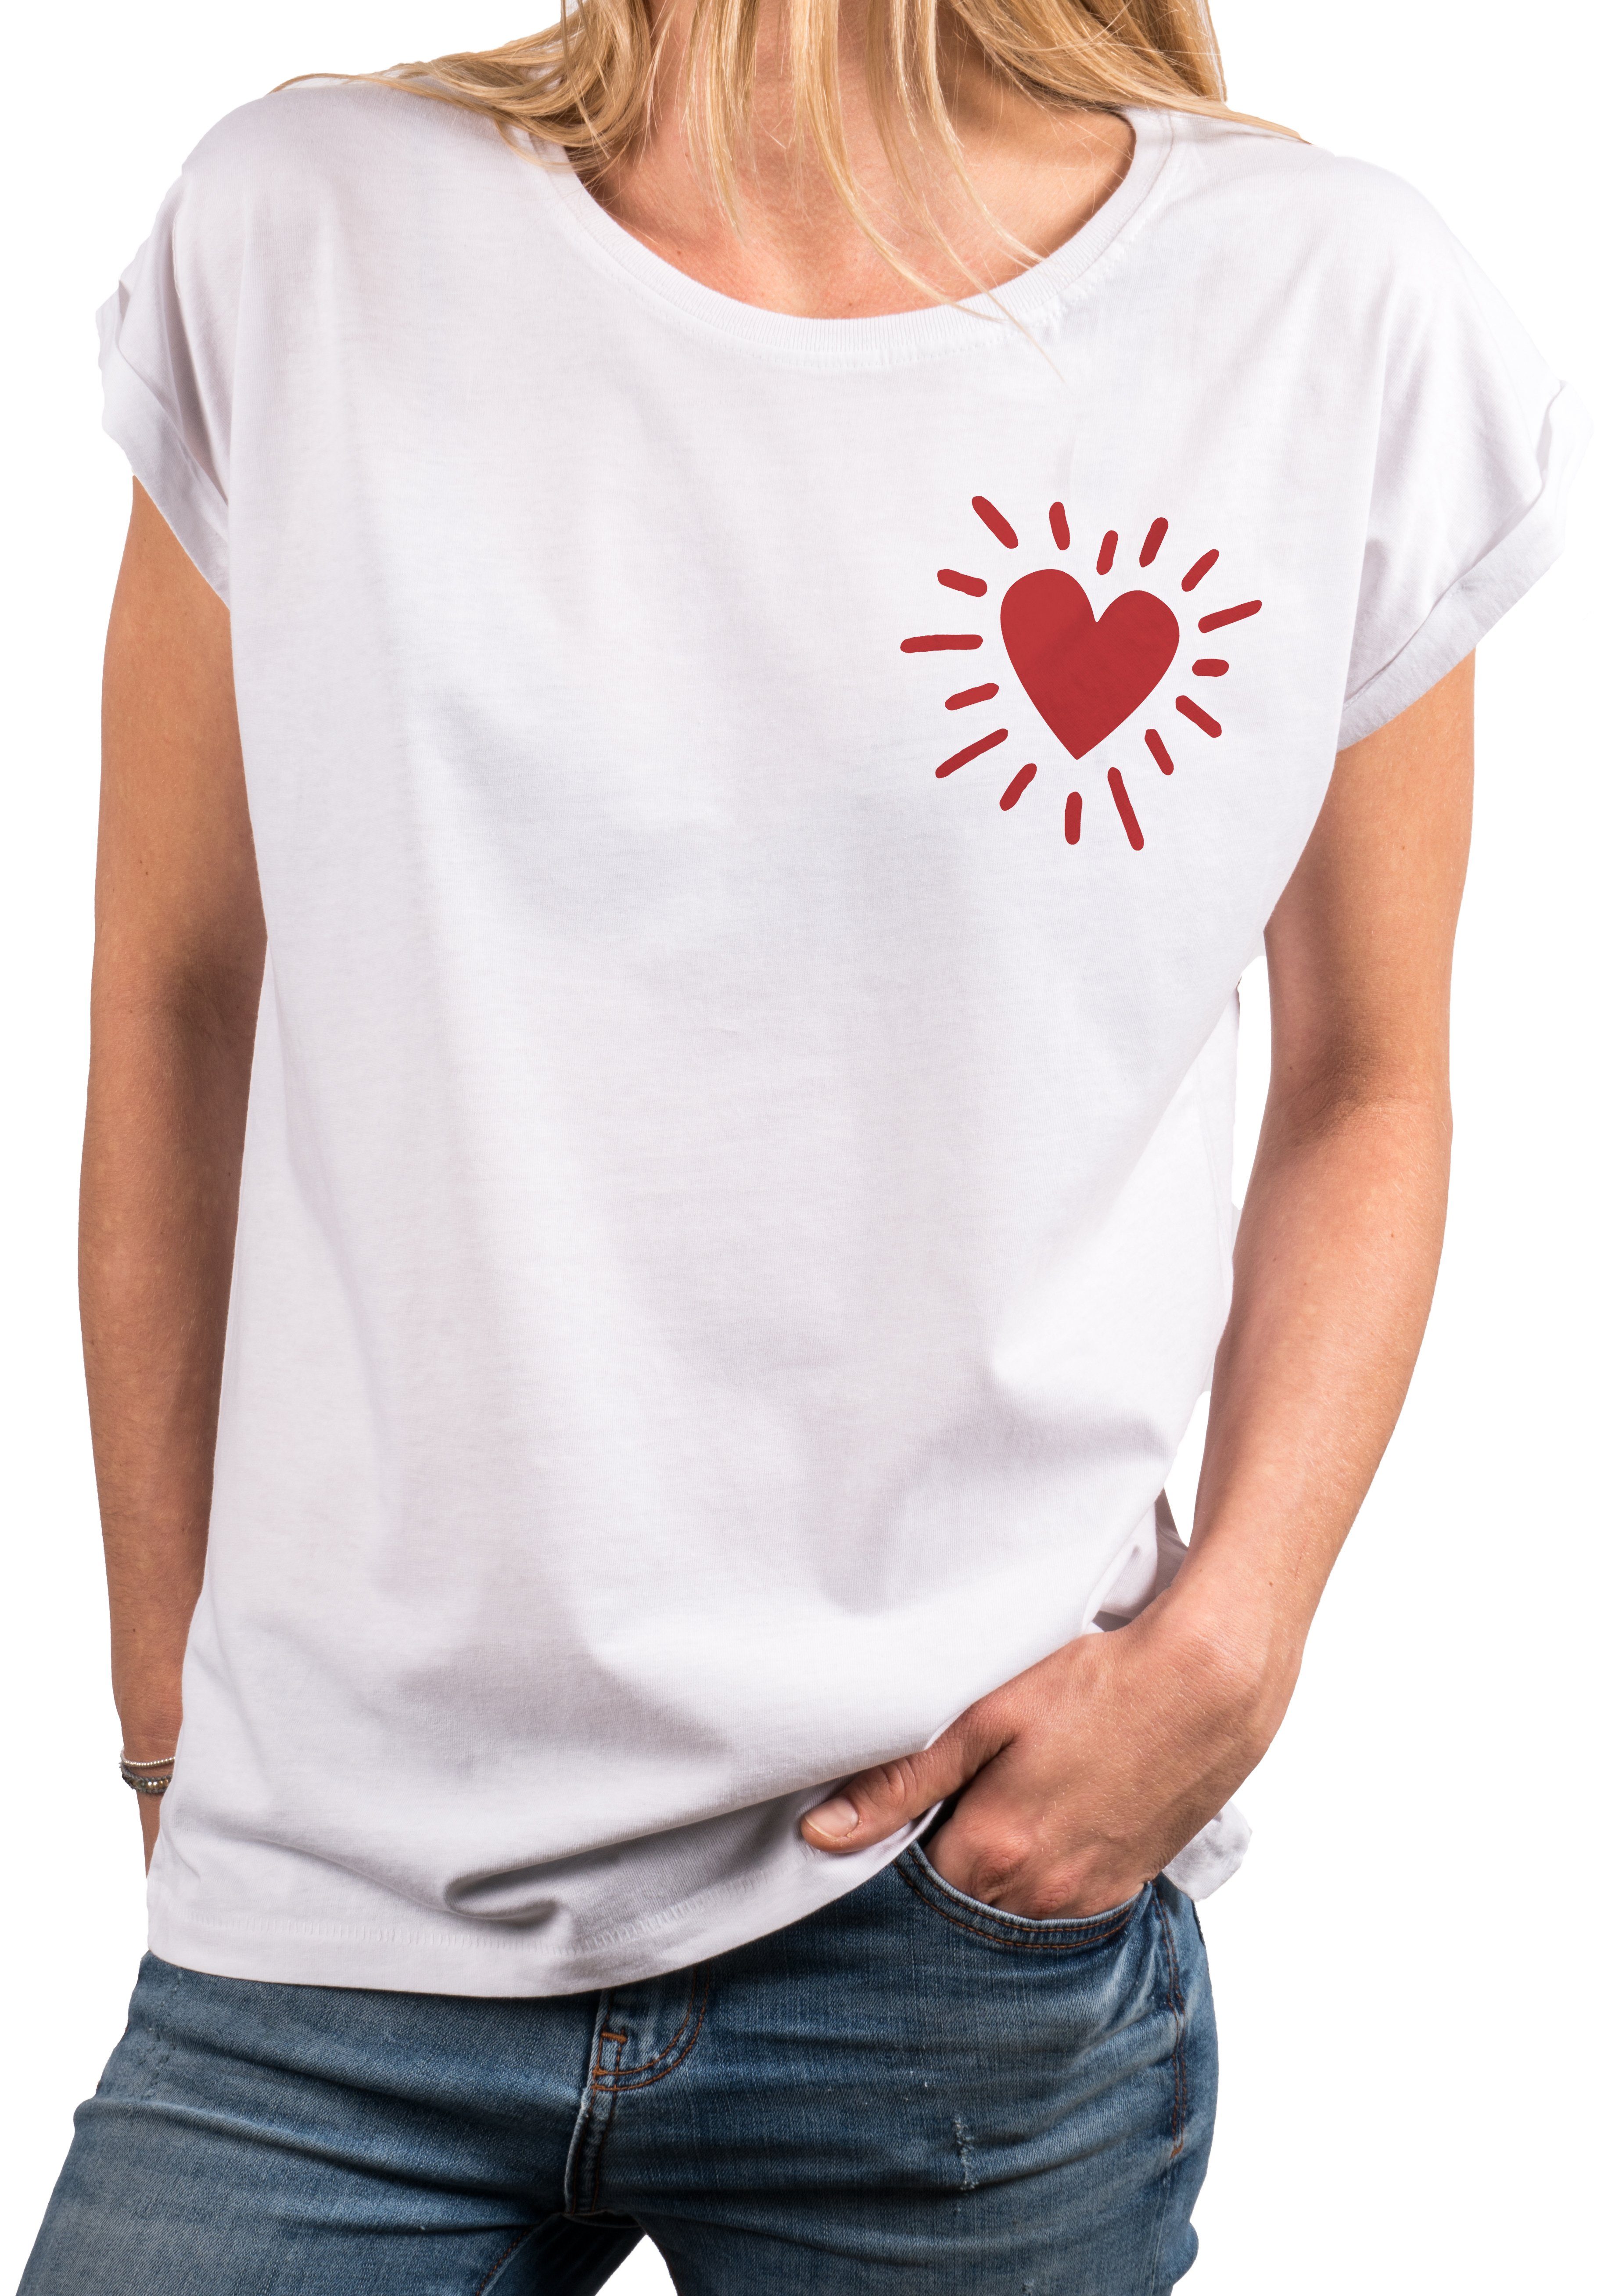 MAKAYA Print-Shirt Damen Druck Kurzam Top Frauen Heart Baumwolle Herzen Oberteile, Aufdruck Motiv Modische Herz